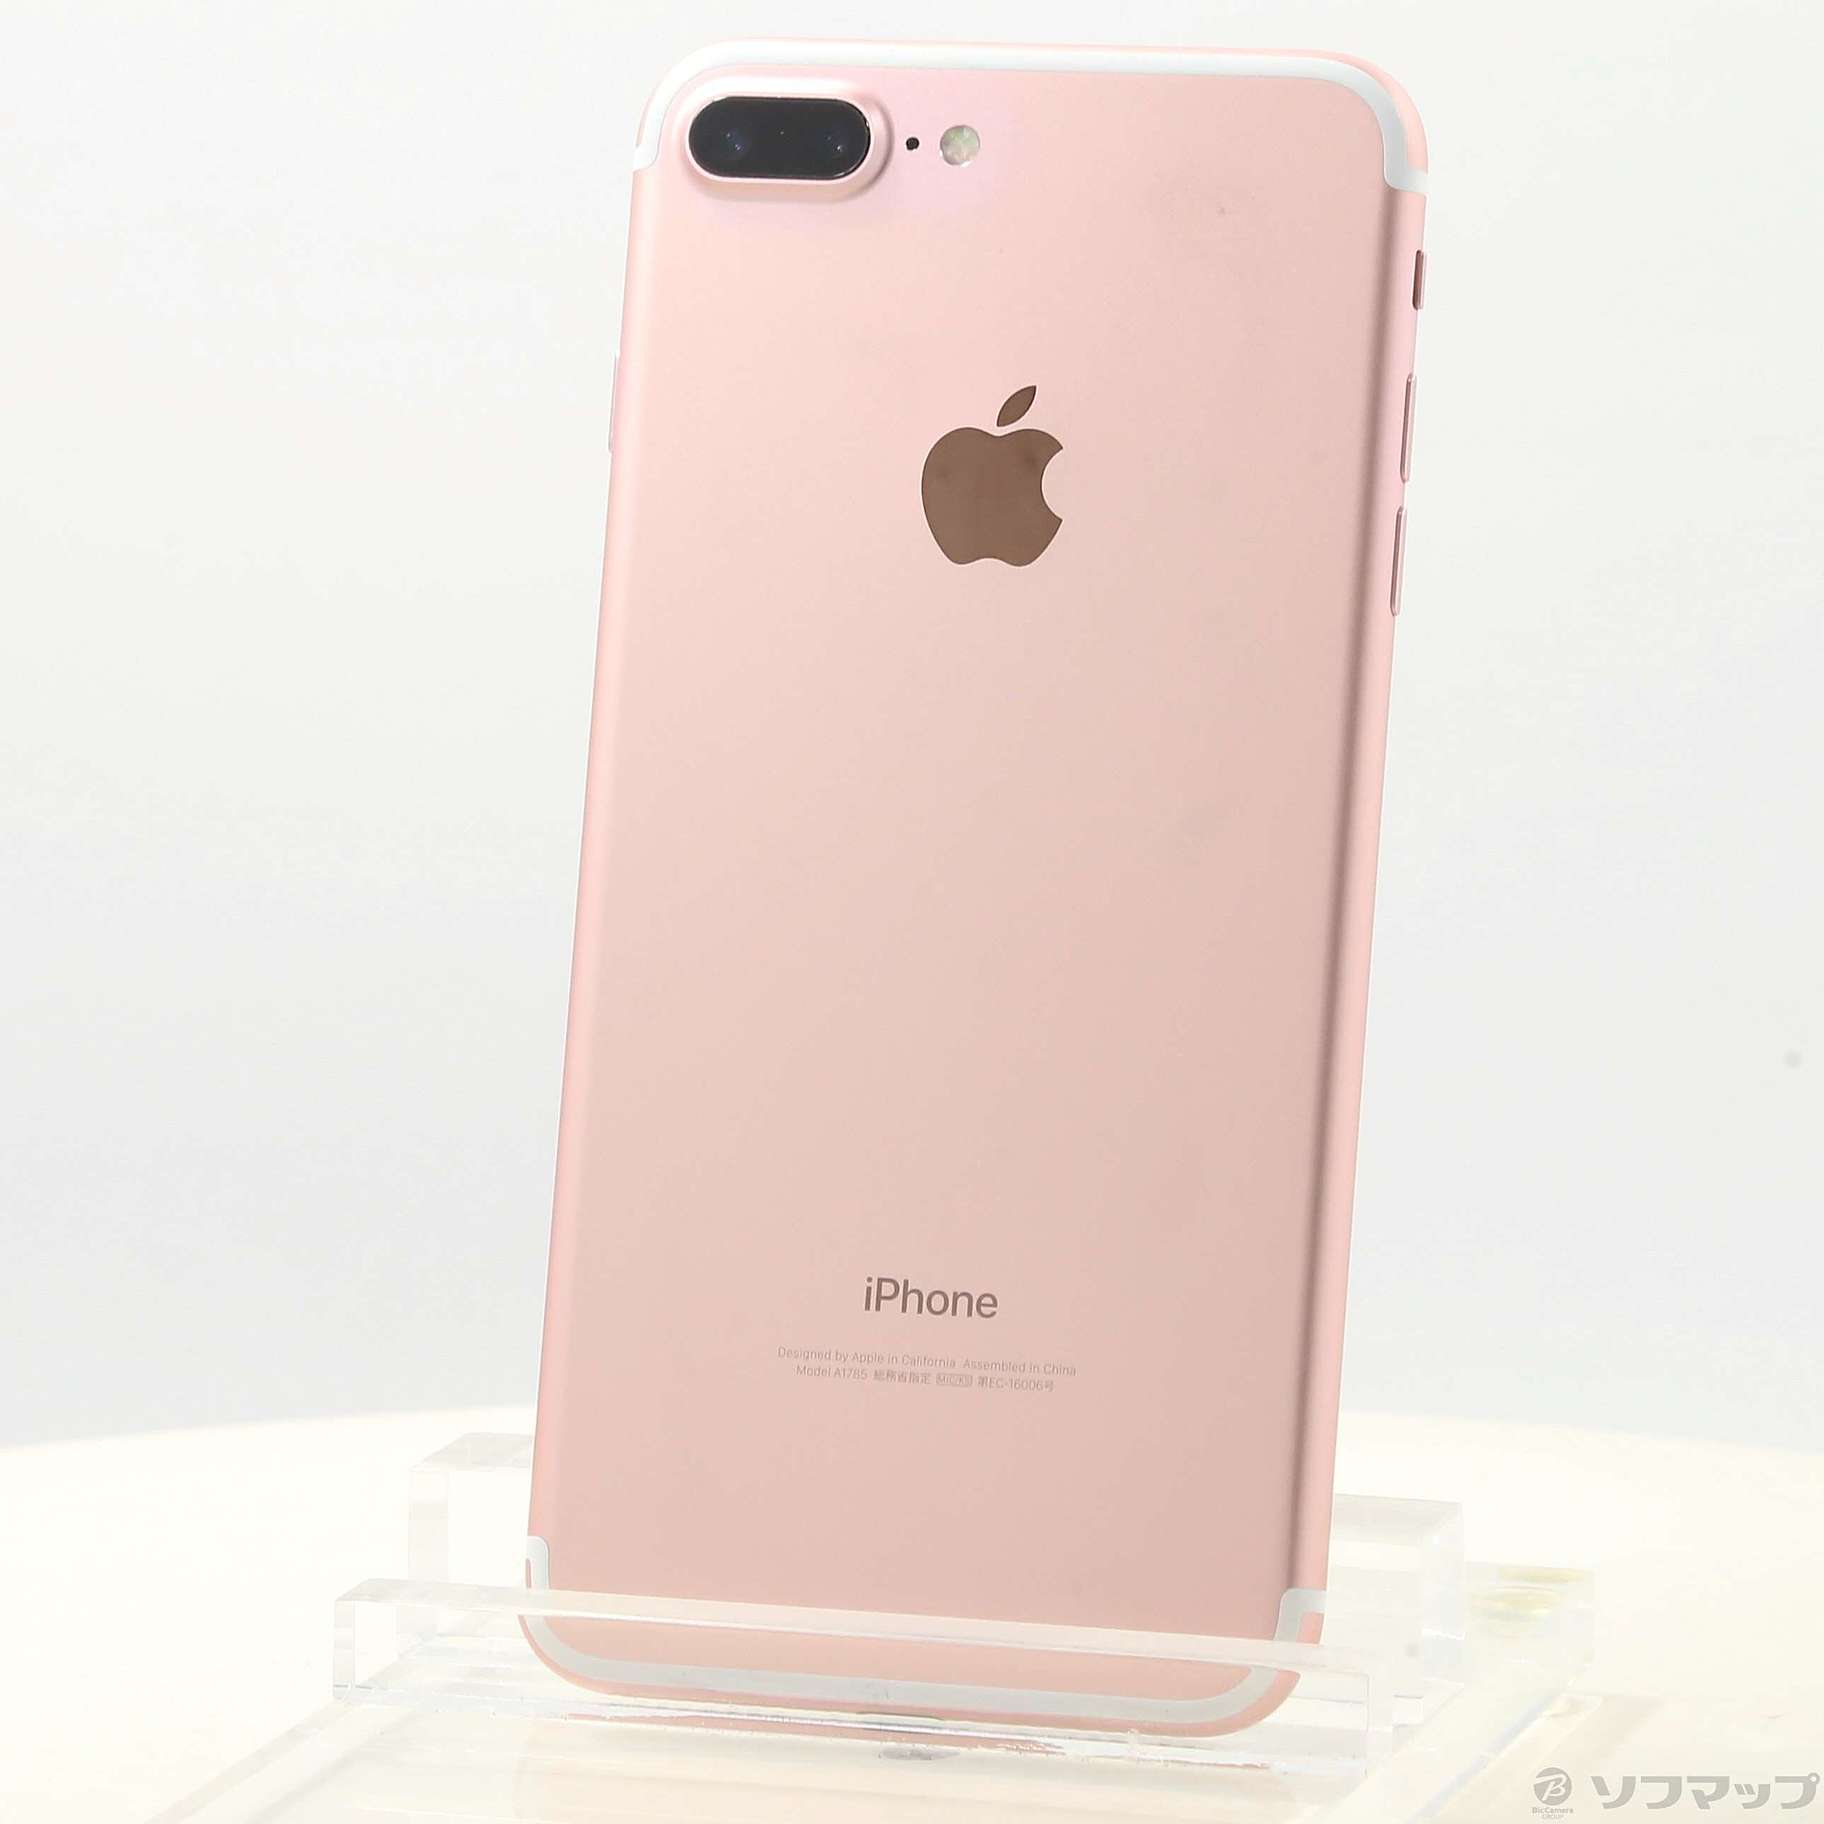 iPhone 7 Plus Gold 32 GB SIMフリー